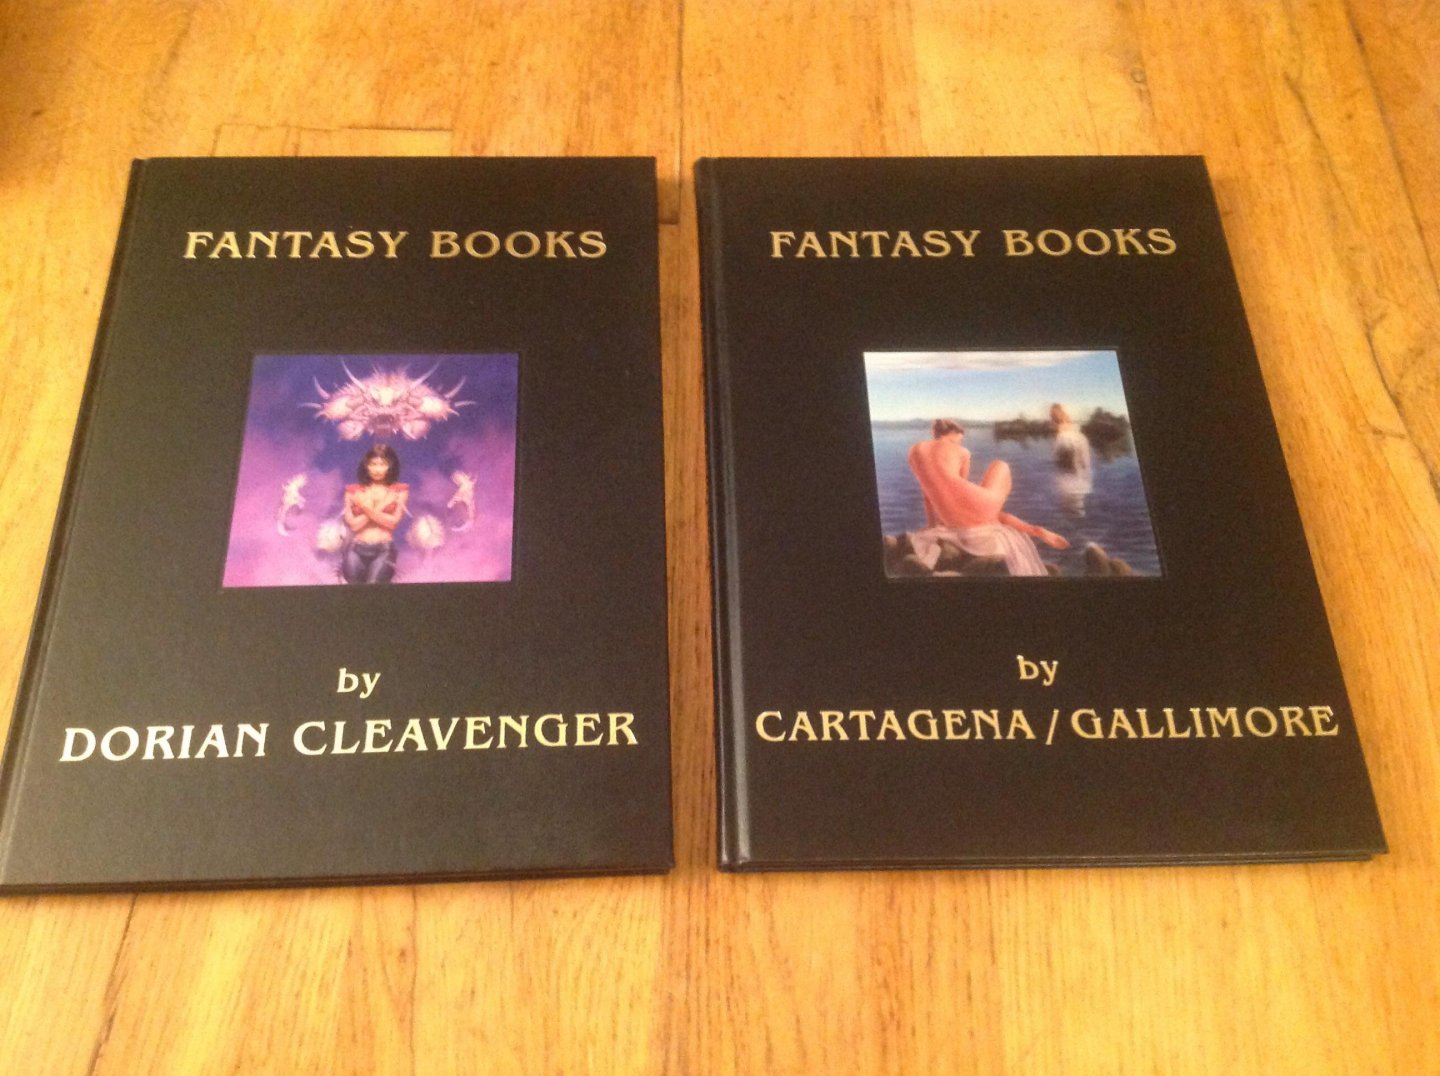  - Fantasy books by Dorian Cleavenger en  Cartagena/ Gallimore